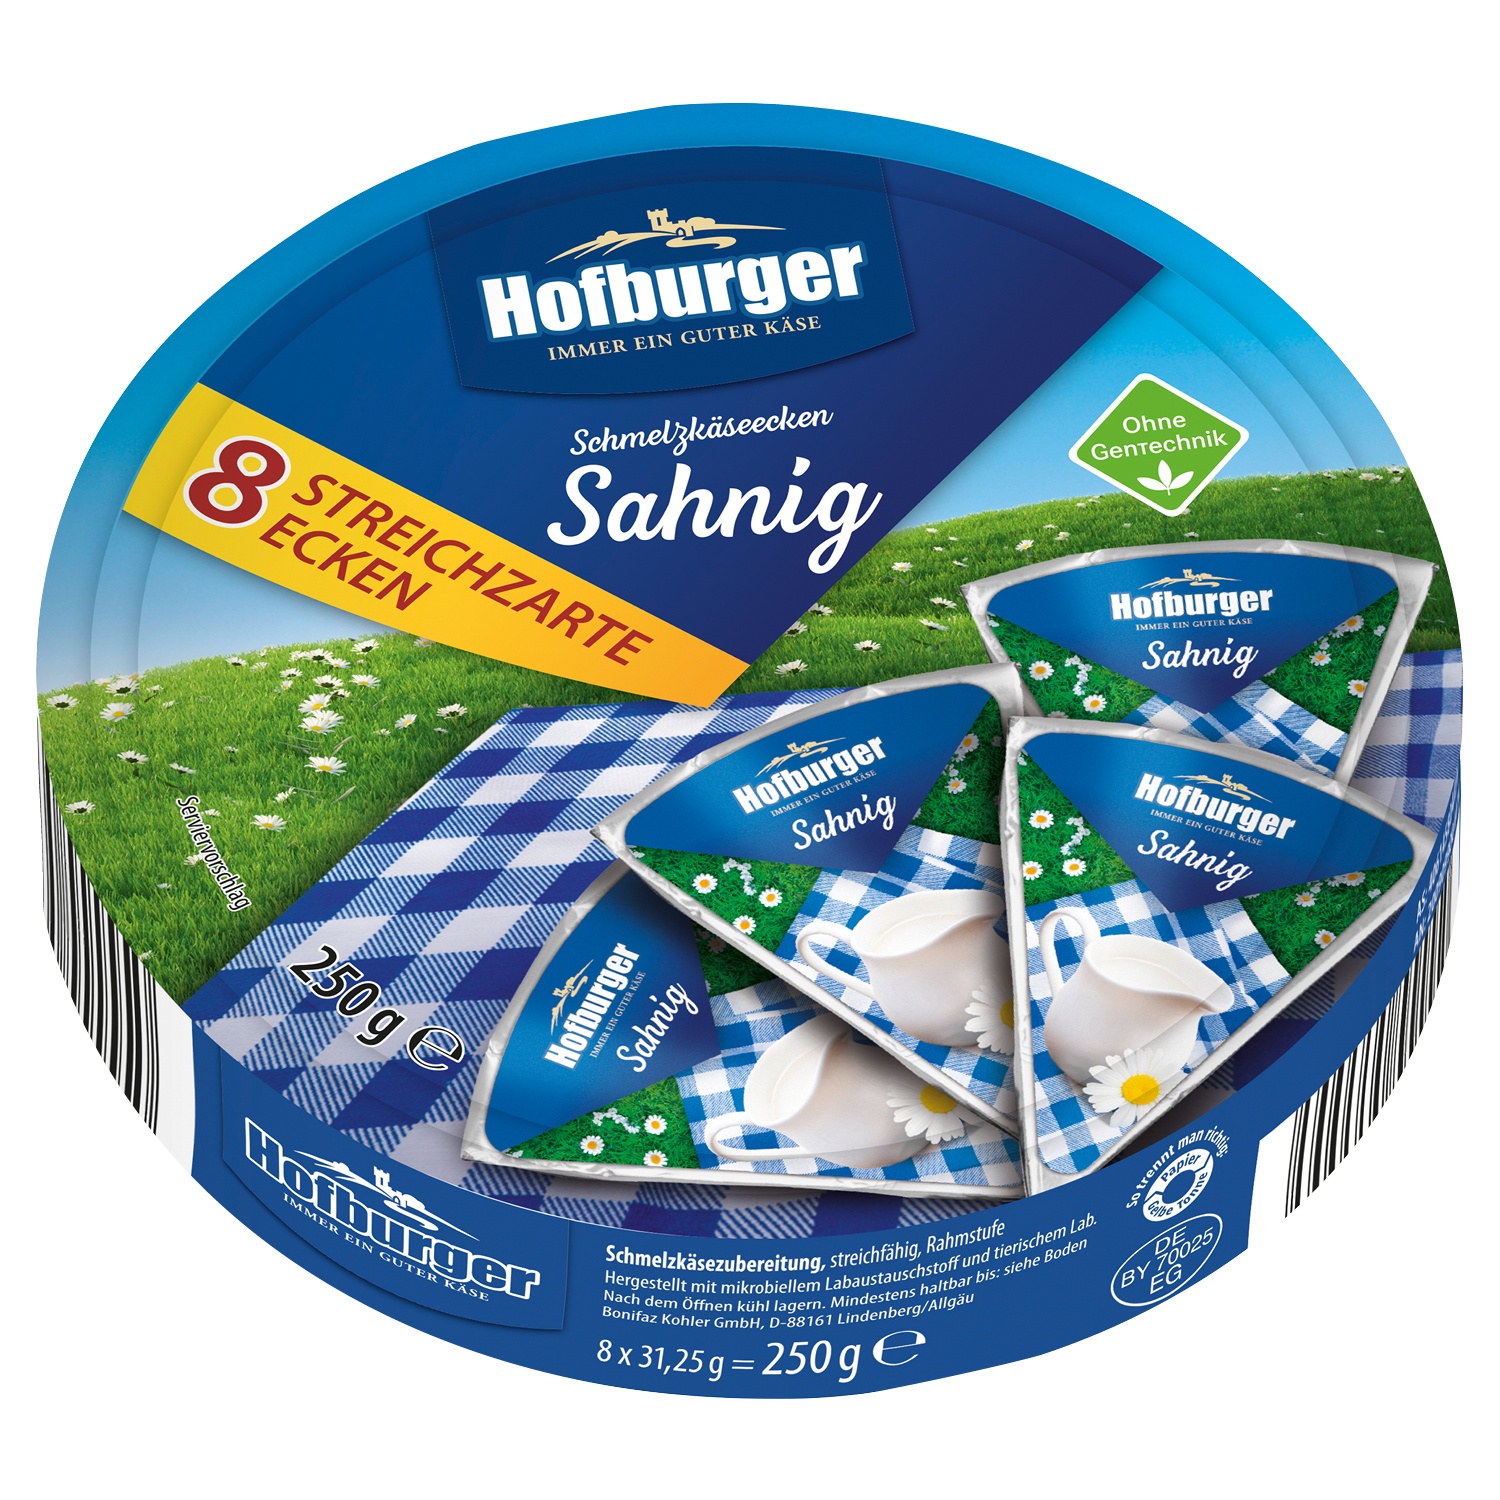 HOFBURGER Schmelzkäse Ecken 250 g